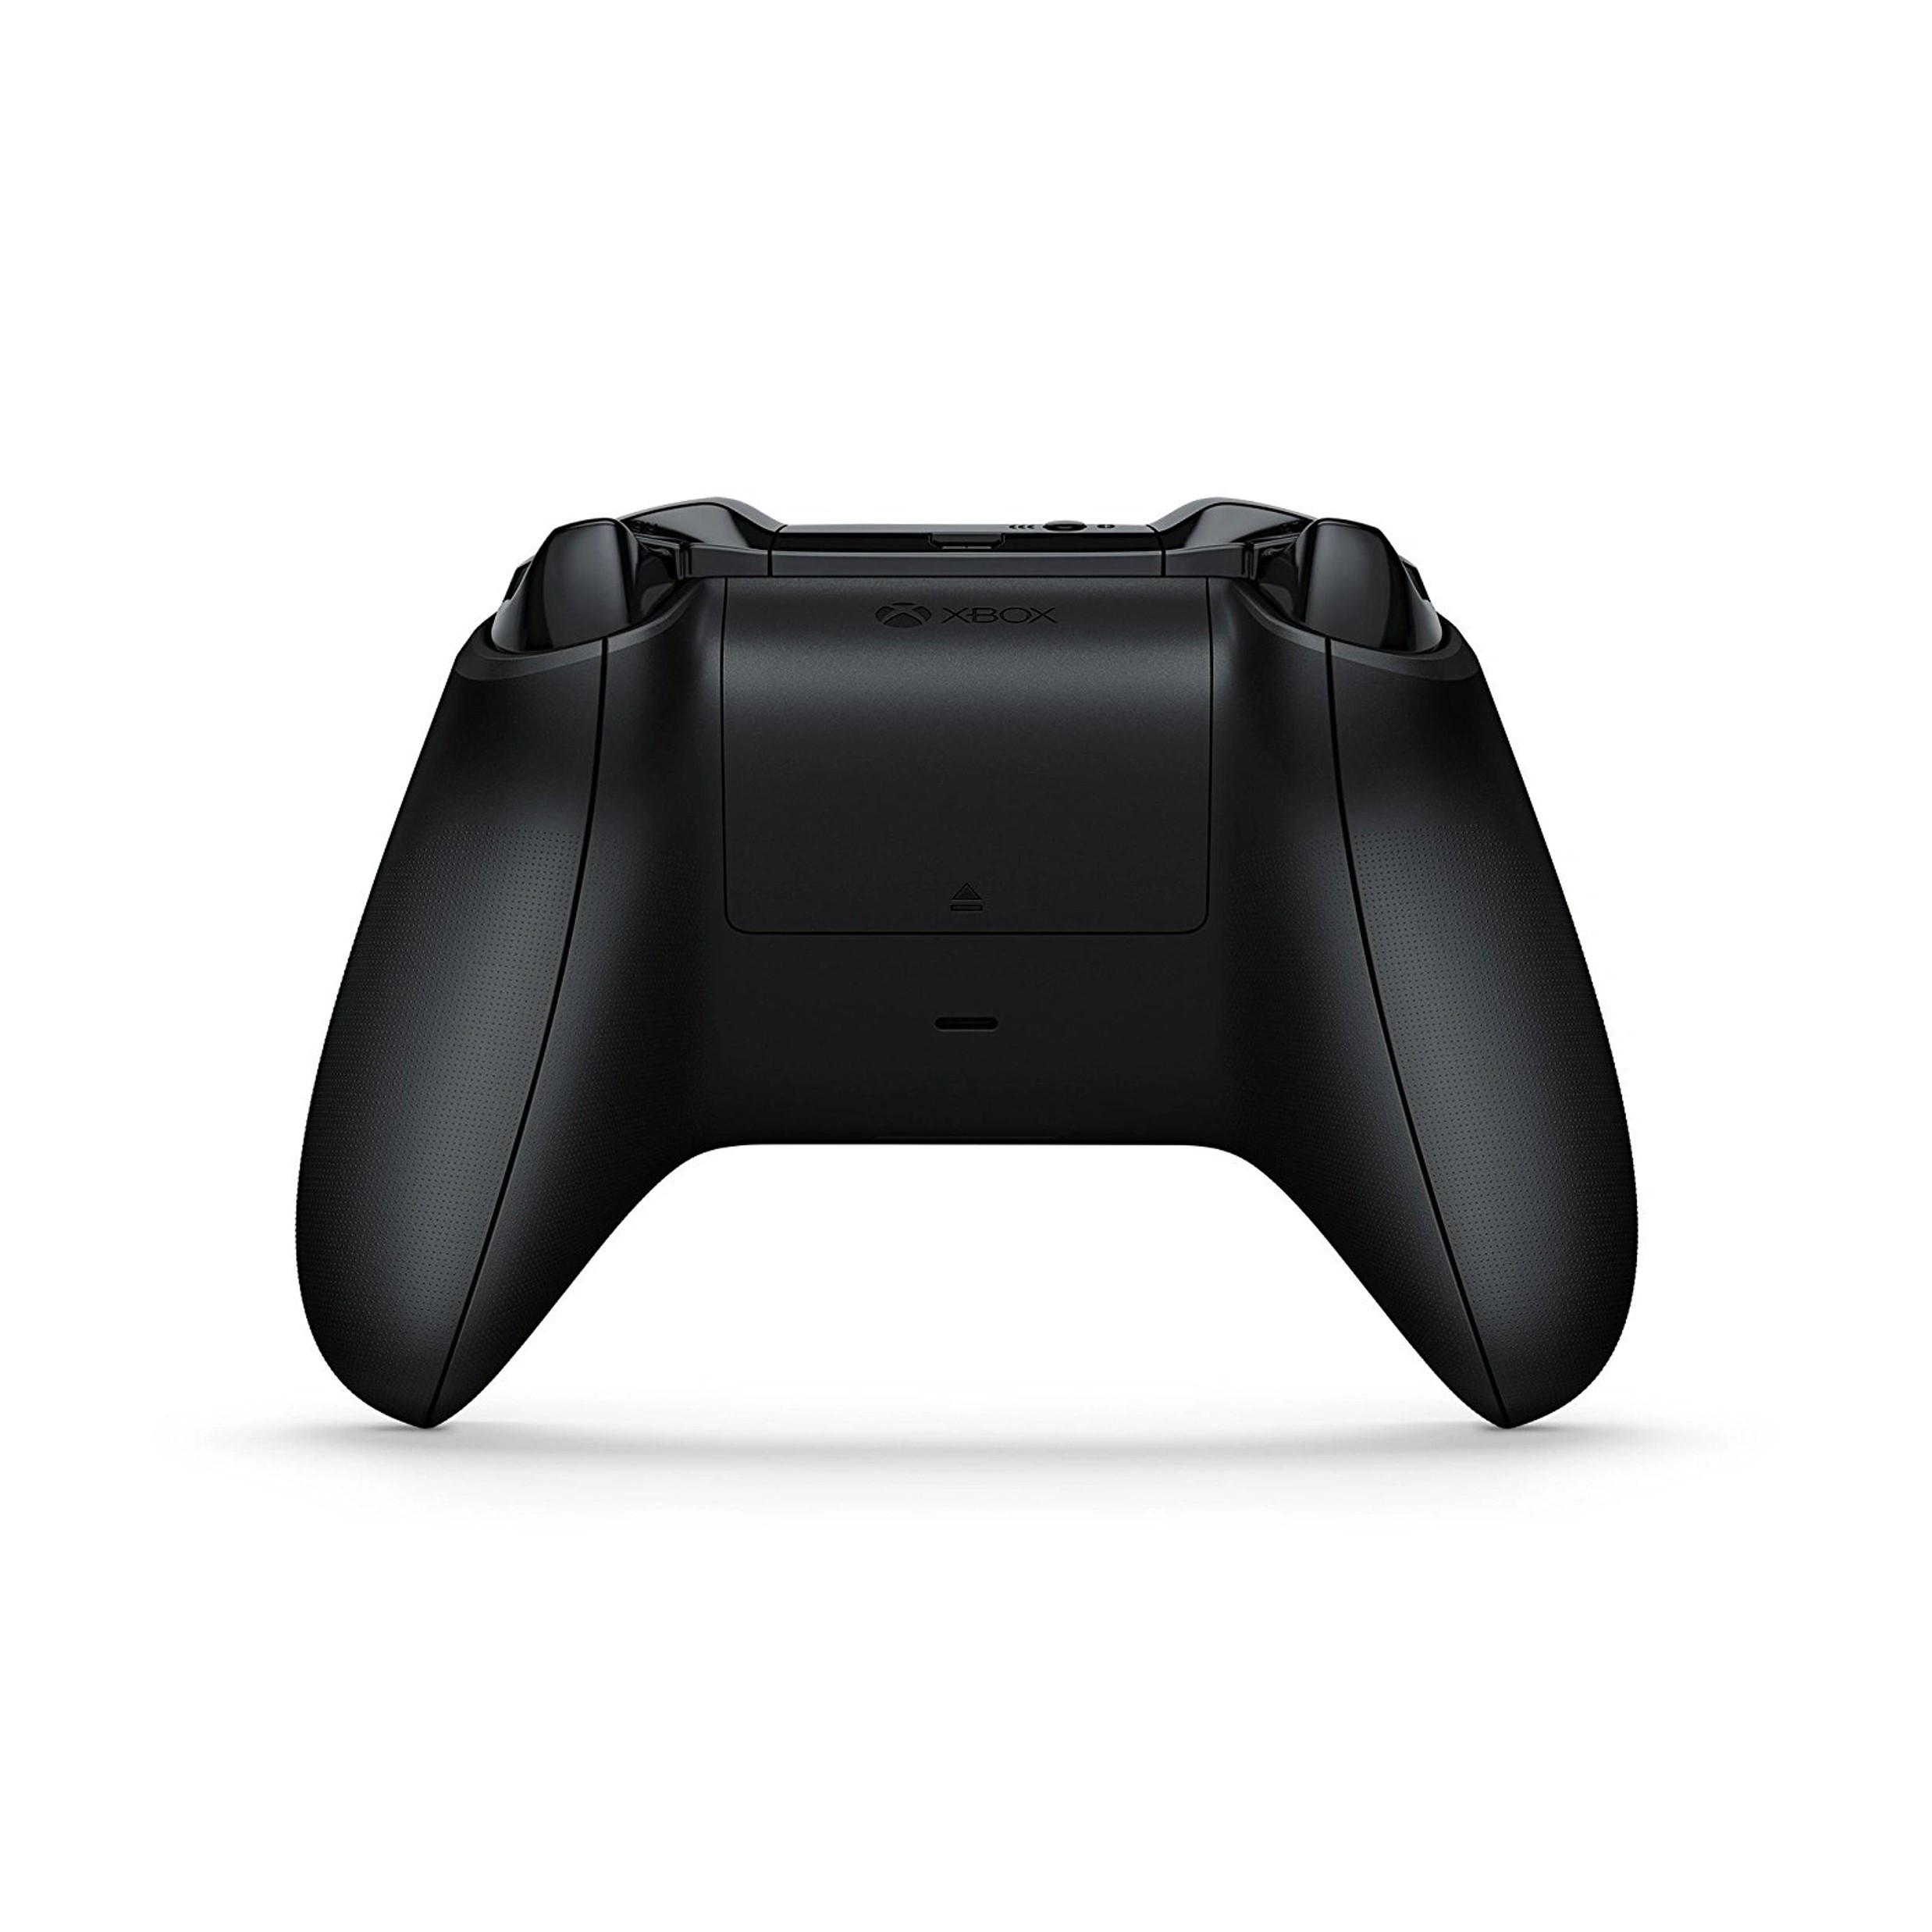 Microsoft Xbox One S Controller - Zwart [Complete] - Xbox One Hardware - 4